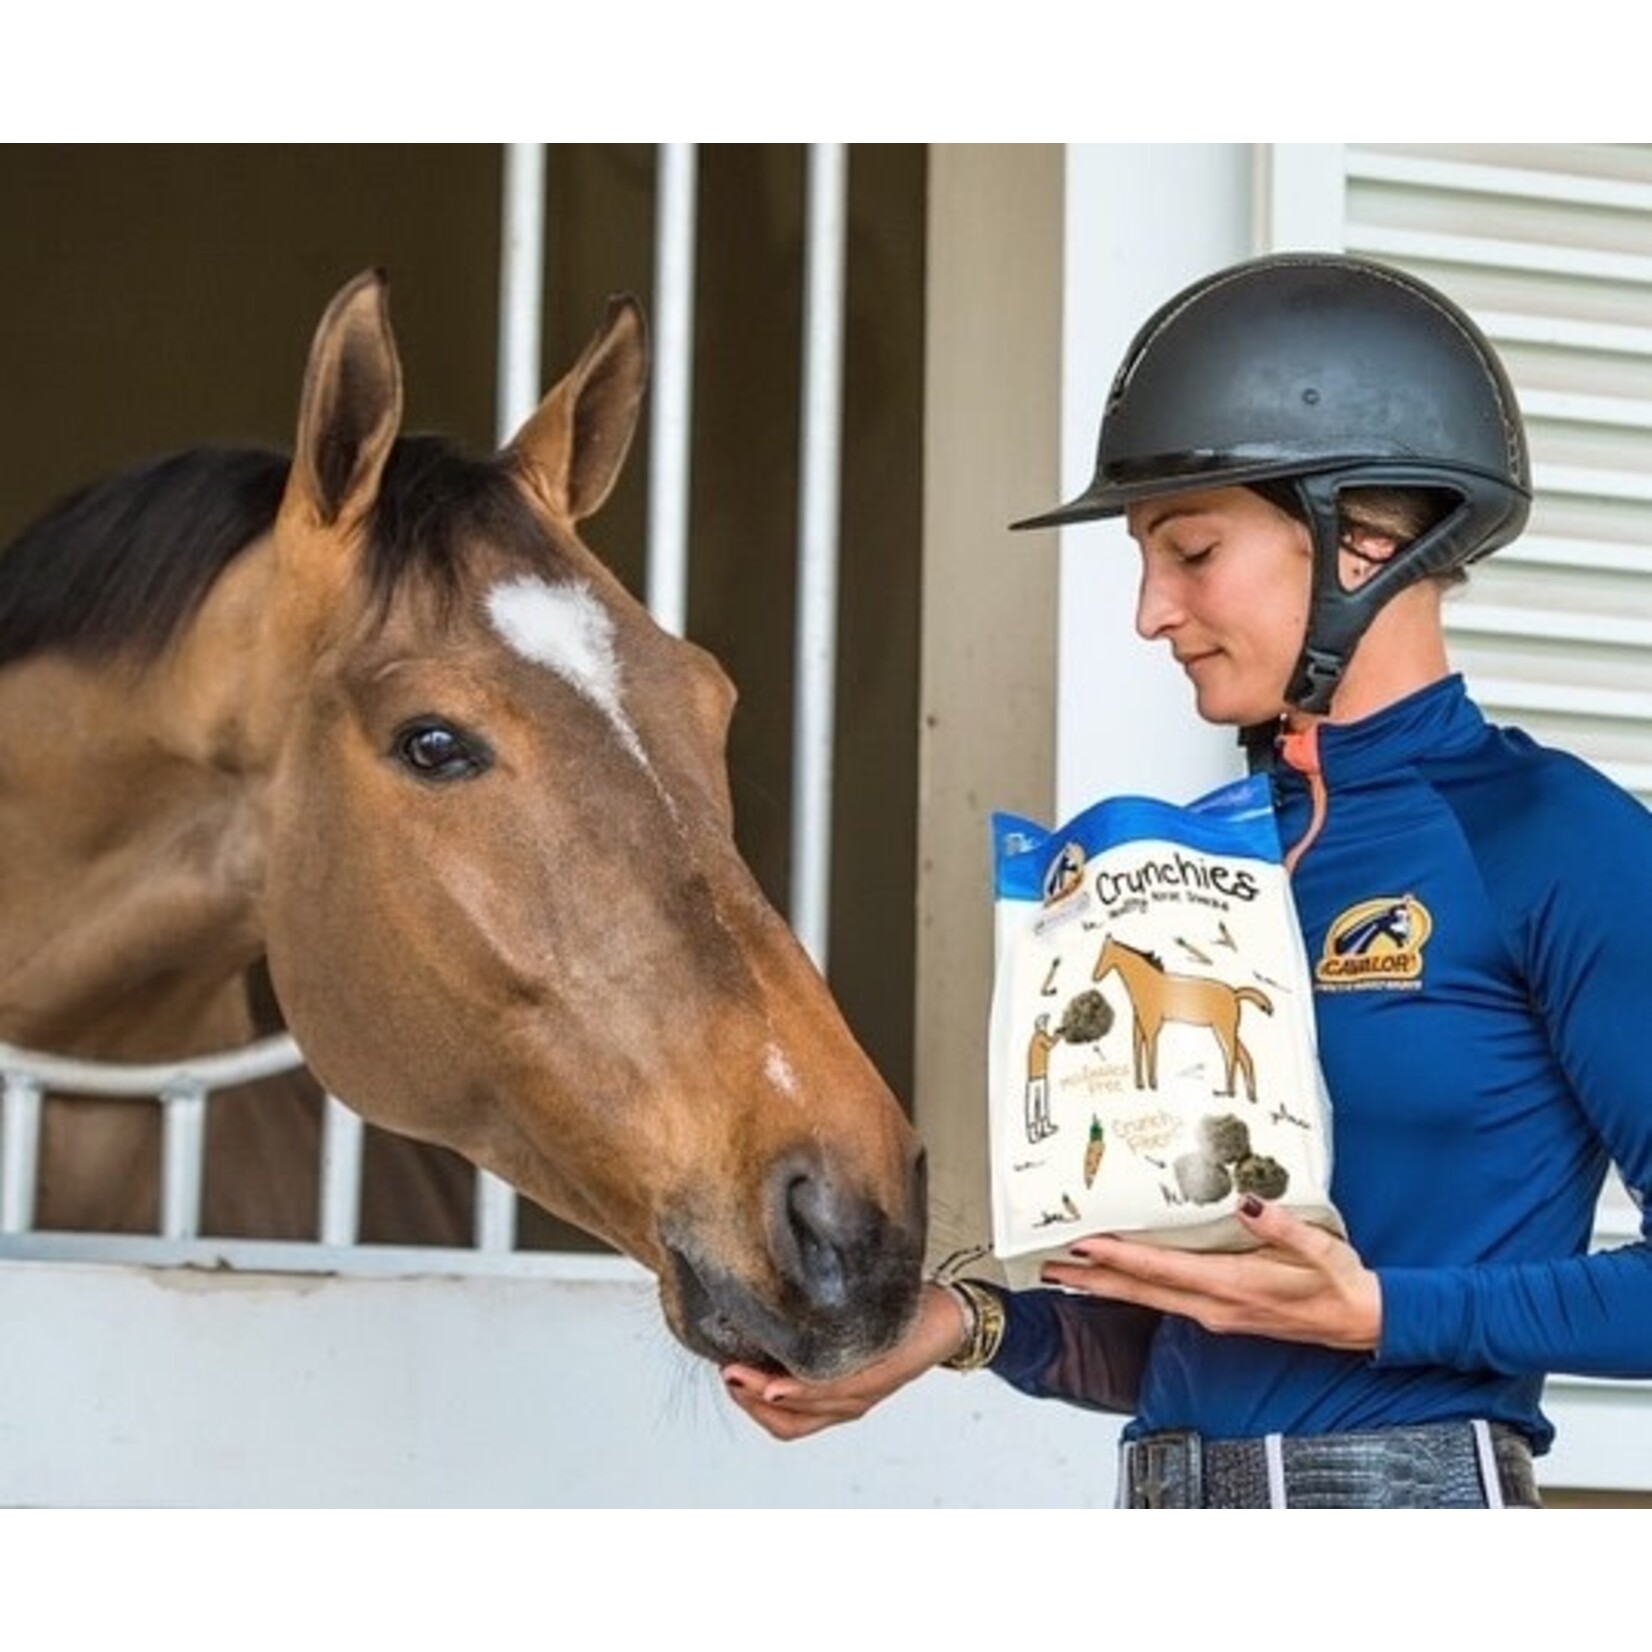 Cavalor Cavalor Crunchies Healthy Horse Snacks, 1.5 kg Bag